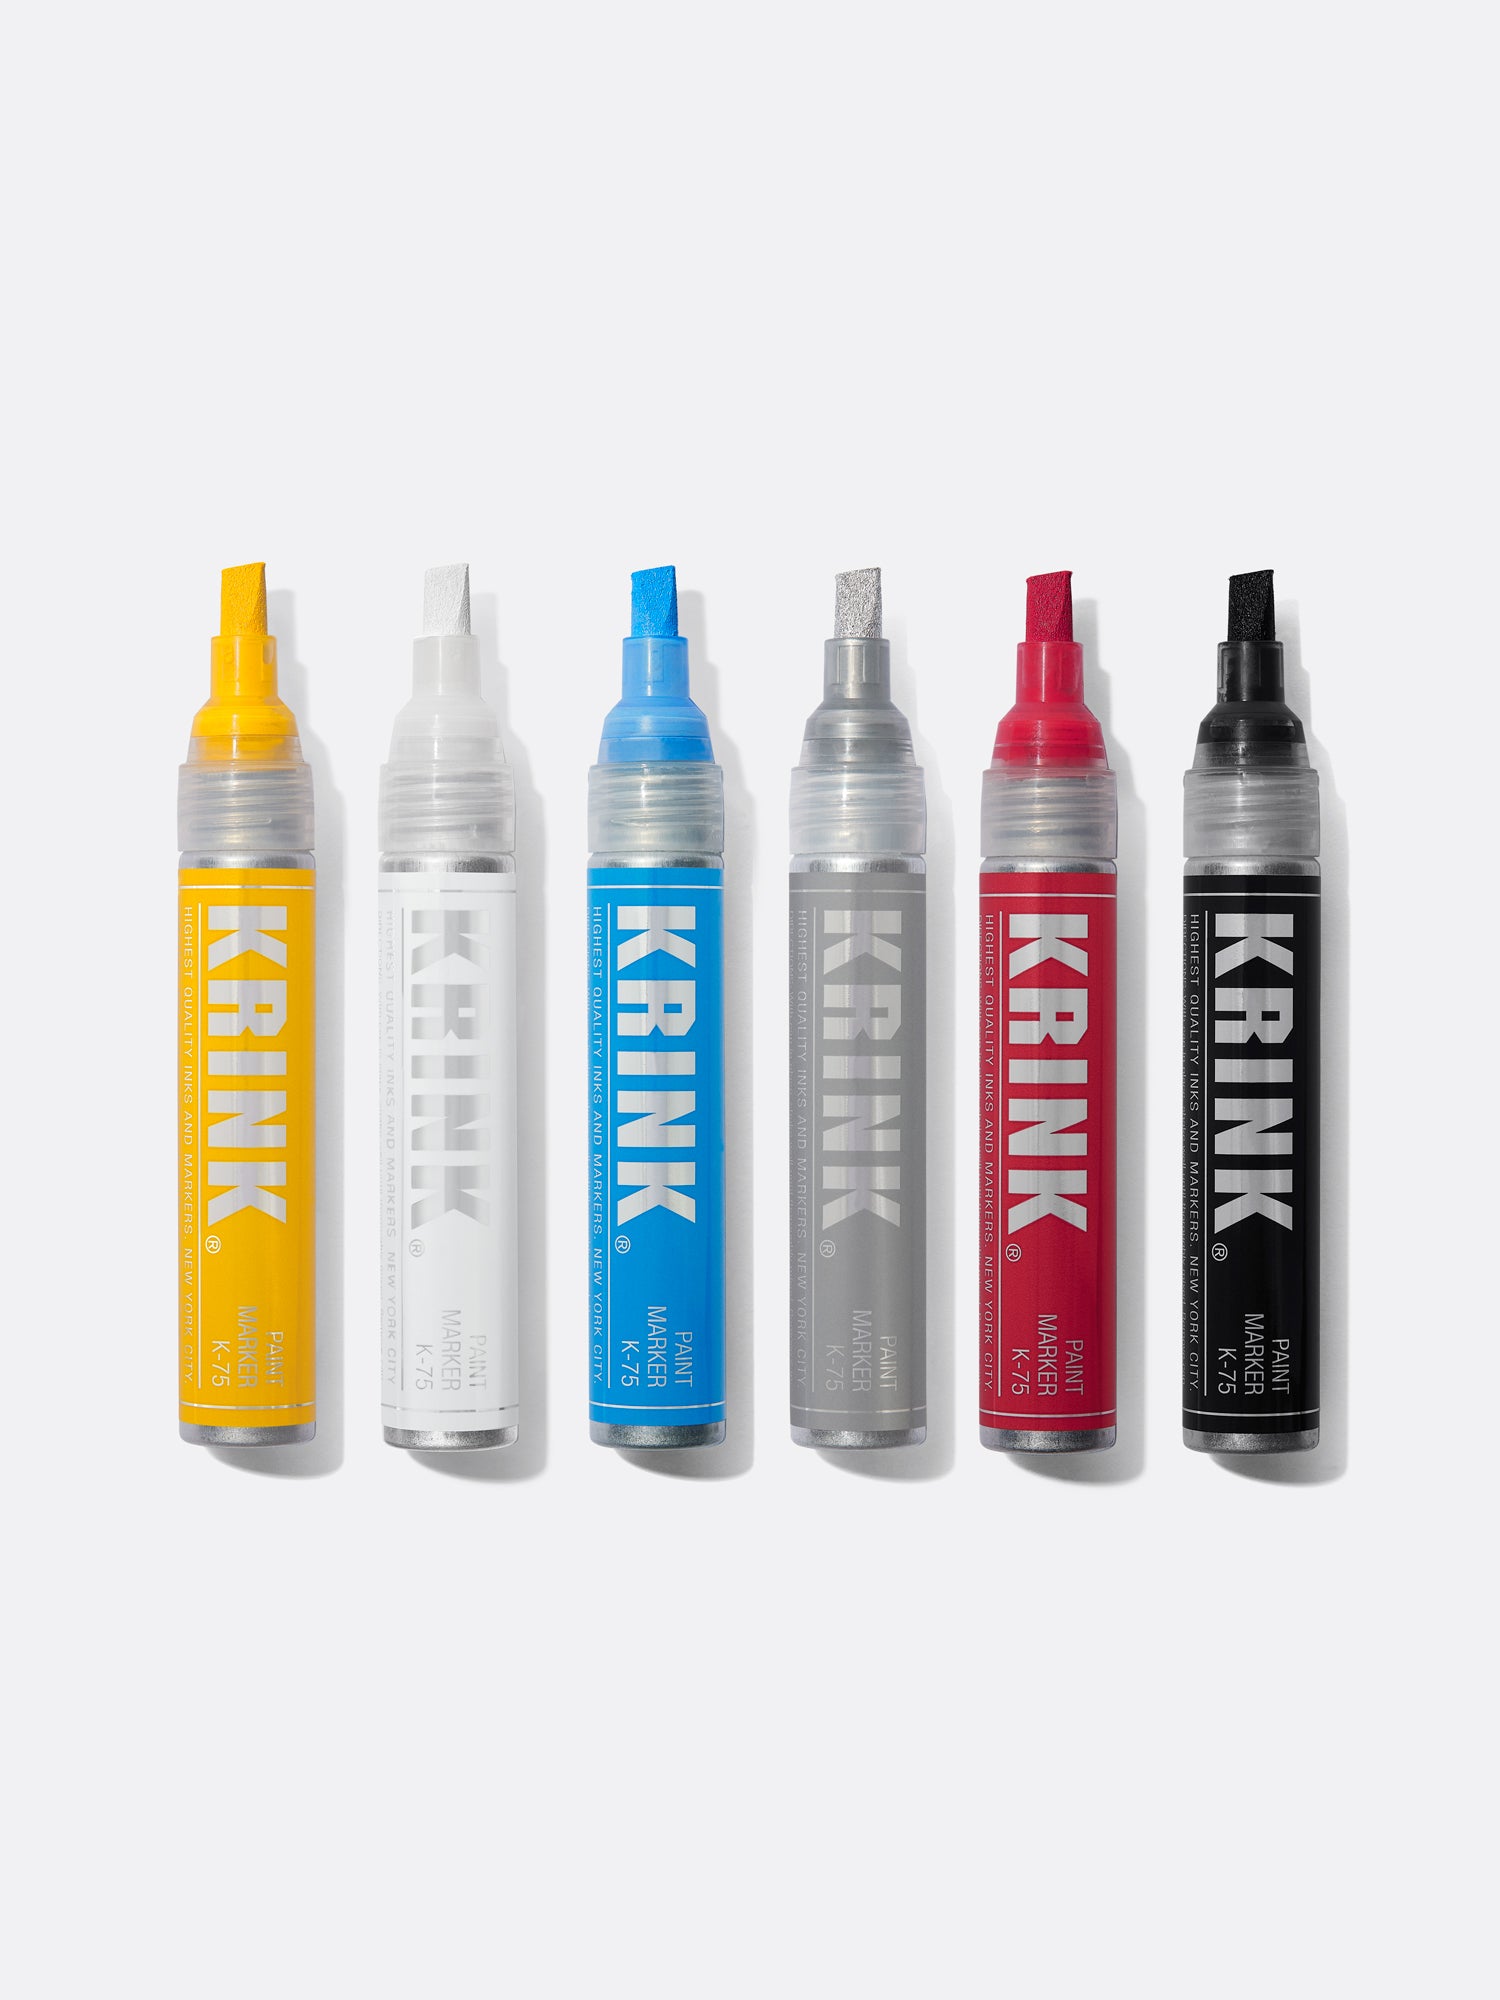 Krink K-75 Chisel Tip Alcohol Paint Markers & Sets